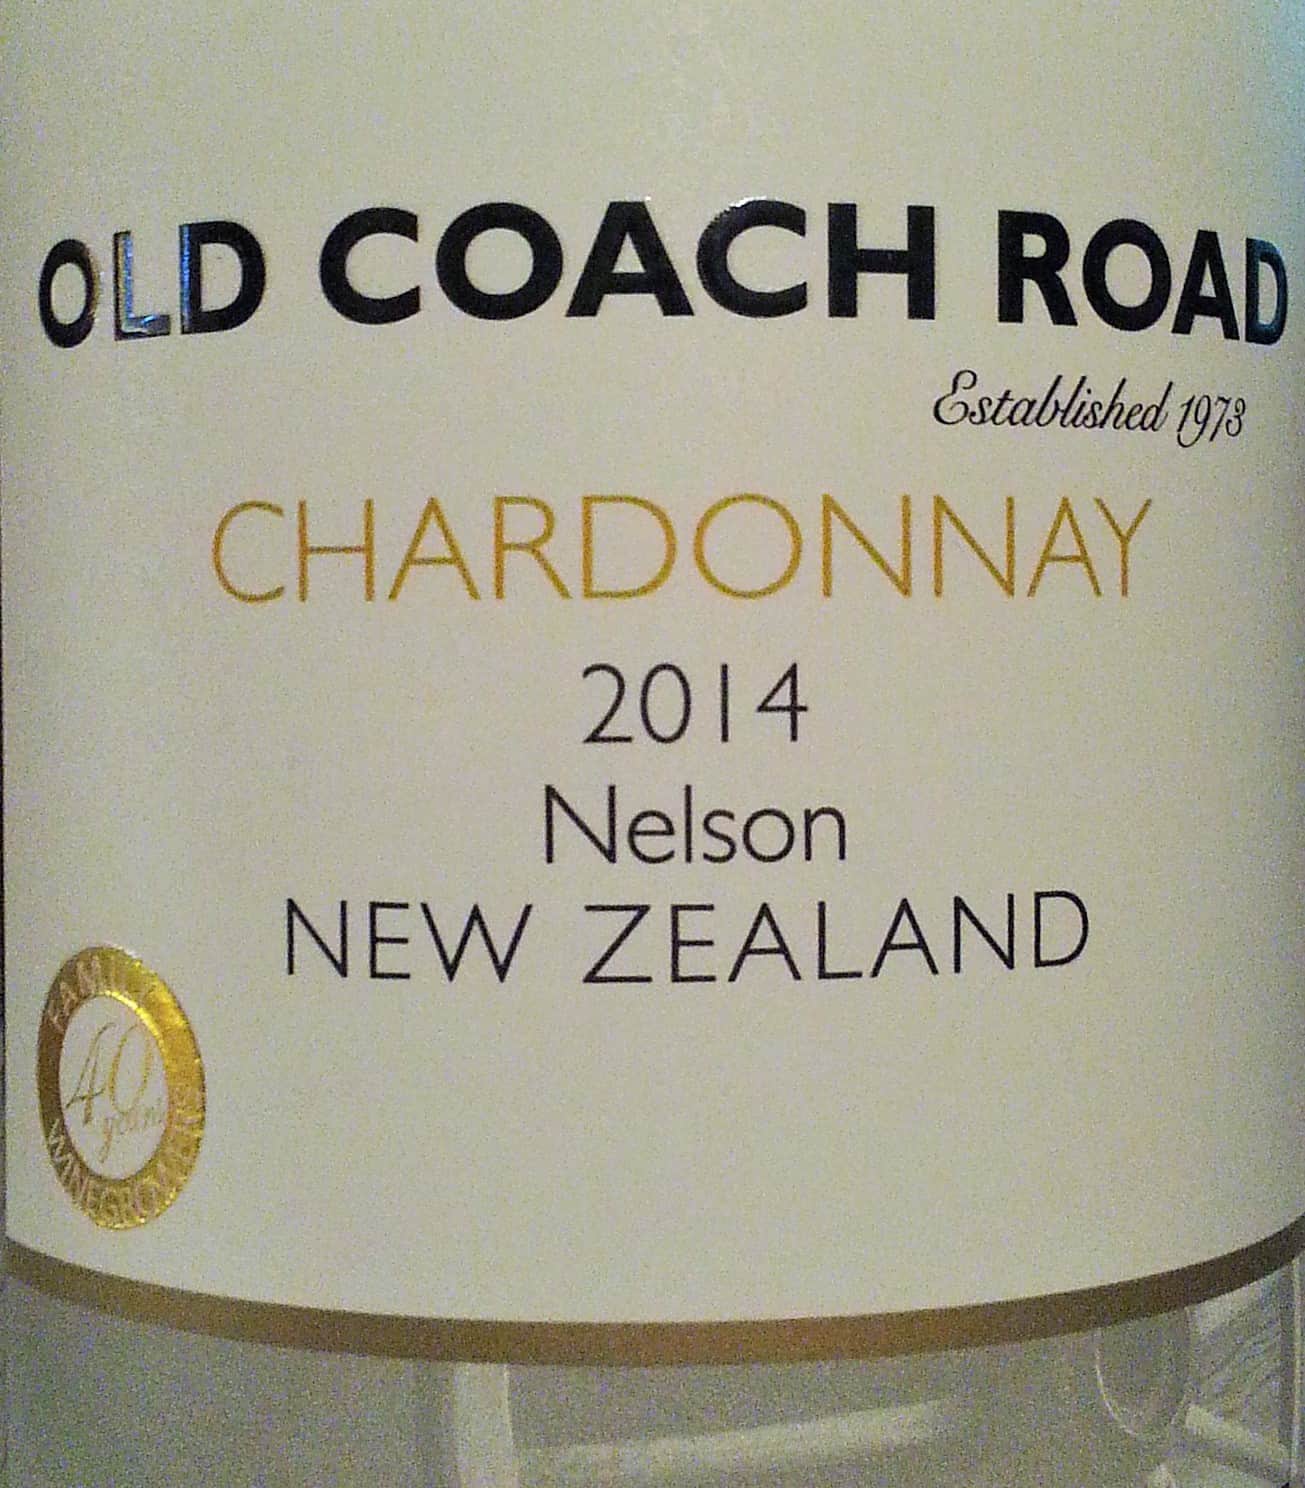 Old Coach Road Chardonnay 2014